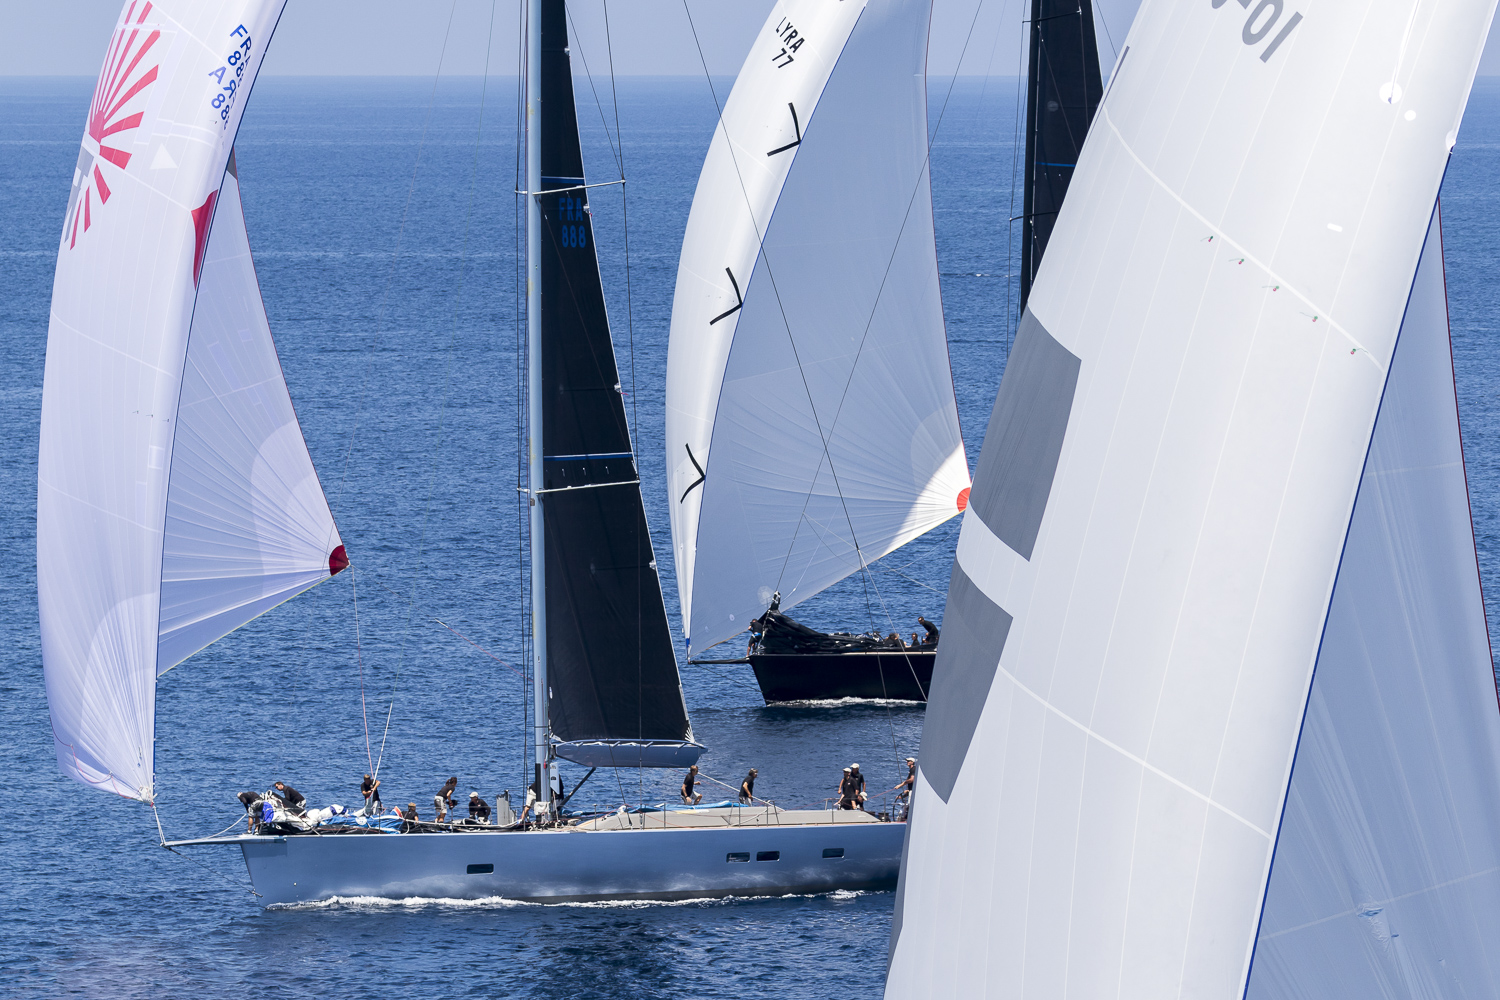 Loro Piana Superyacht Regatta 2017 - Images race Day 4 online  - News - Yacht Club Costa Smeralda